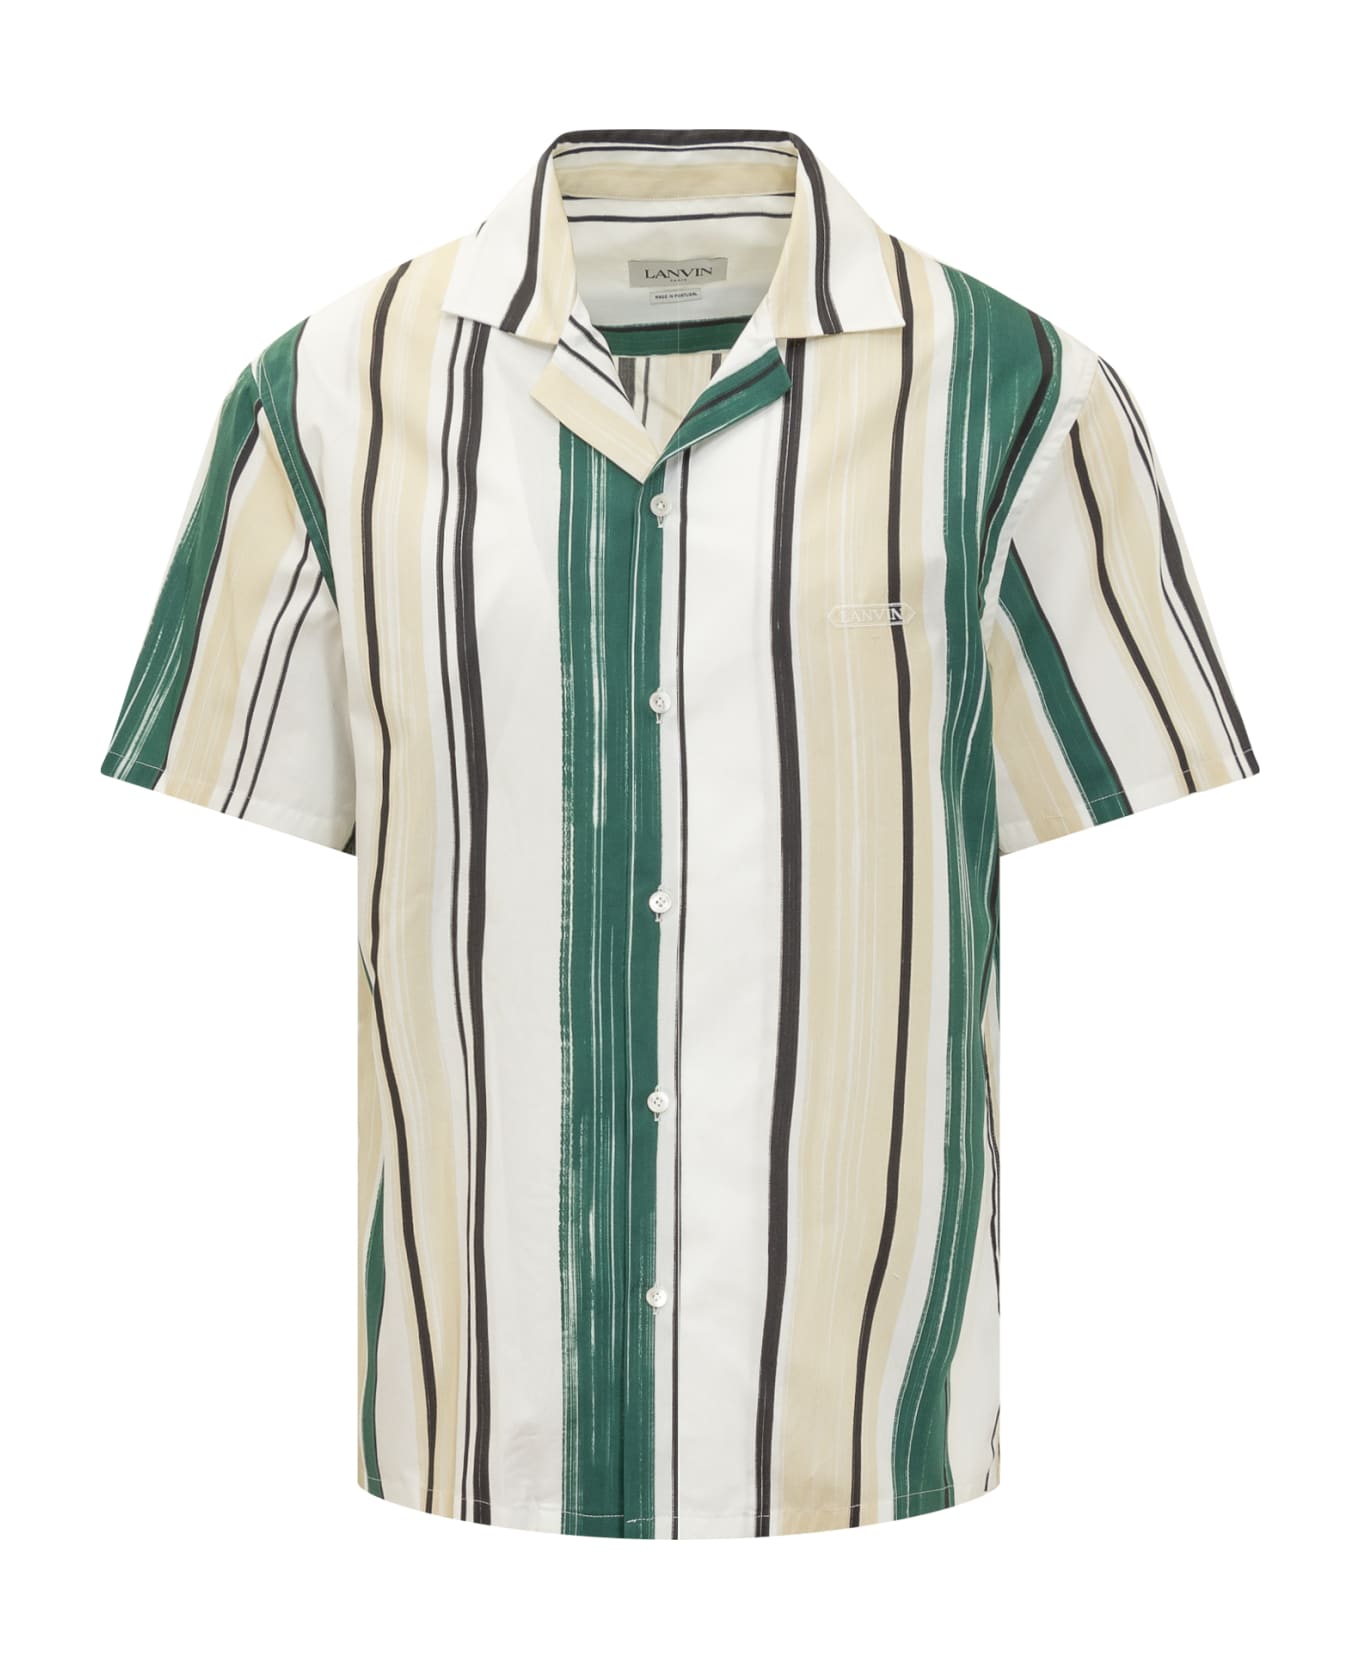 Lanvin Printed Bowling Shirt - Bianco/verde